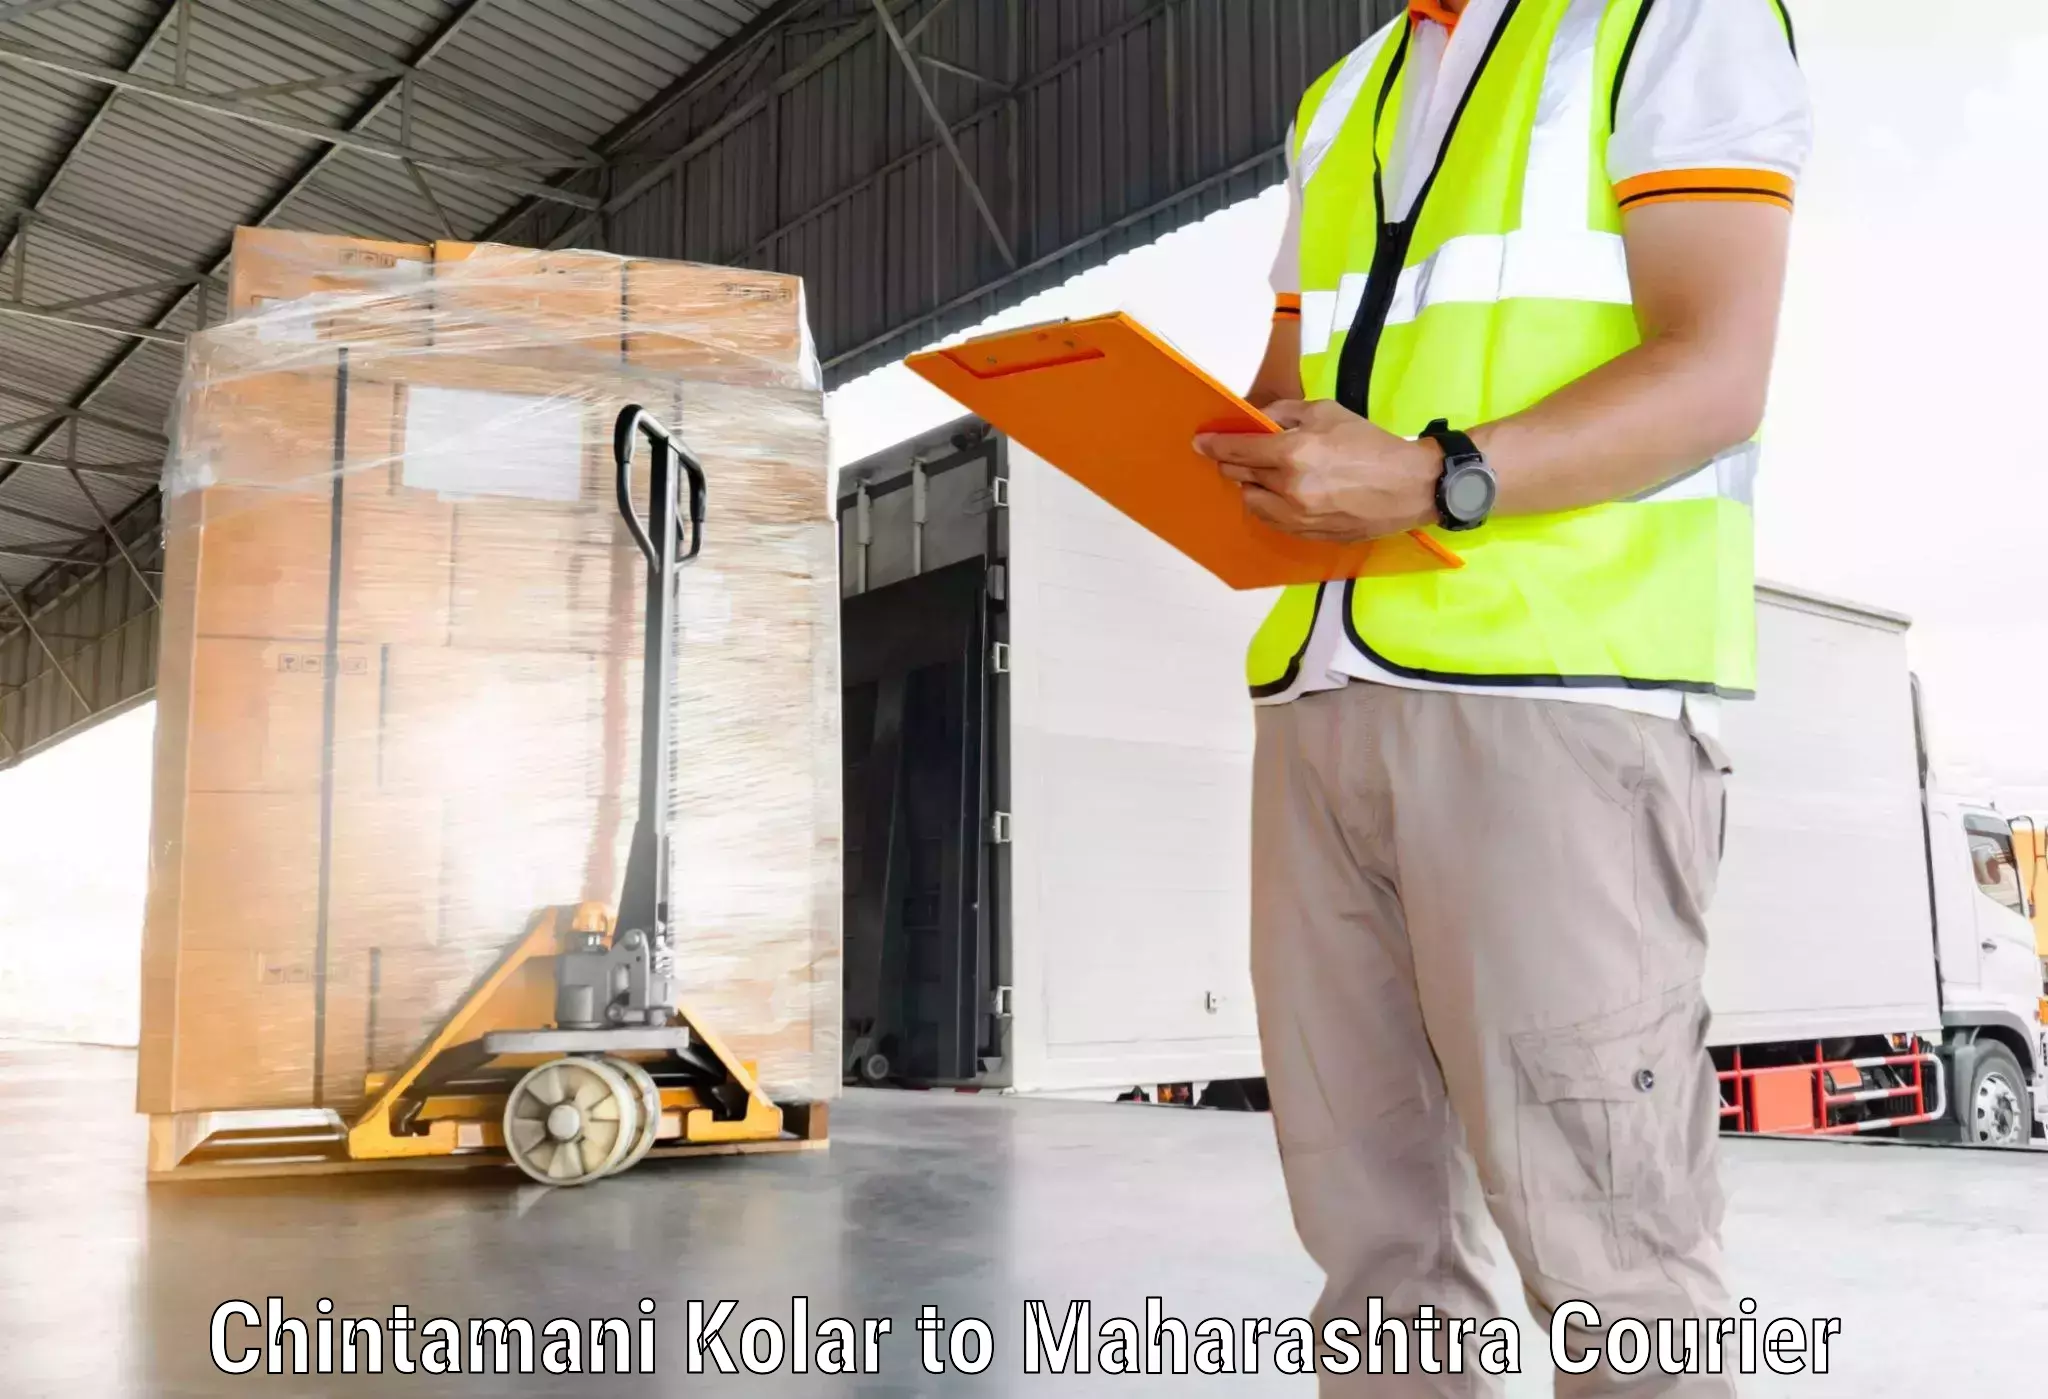 Cargo delivery service Chintamani Kolar to Chopda